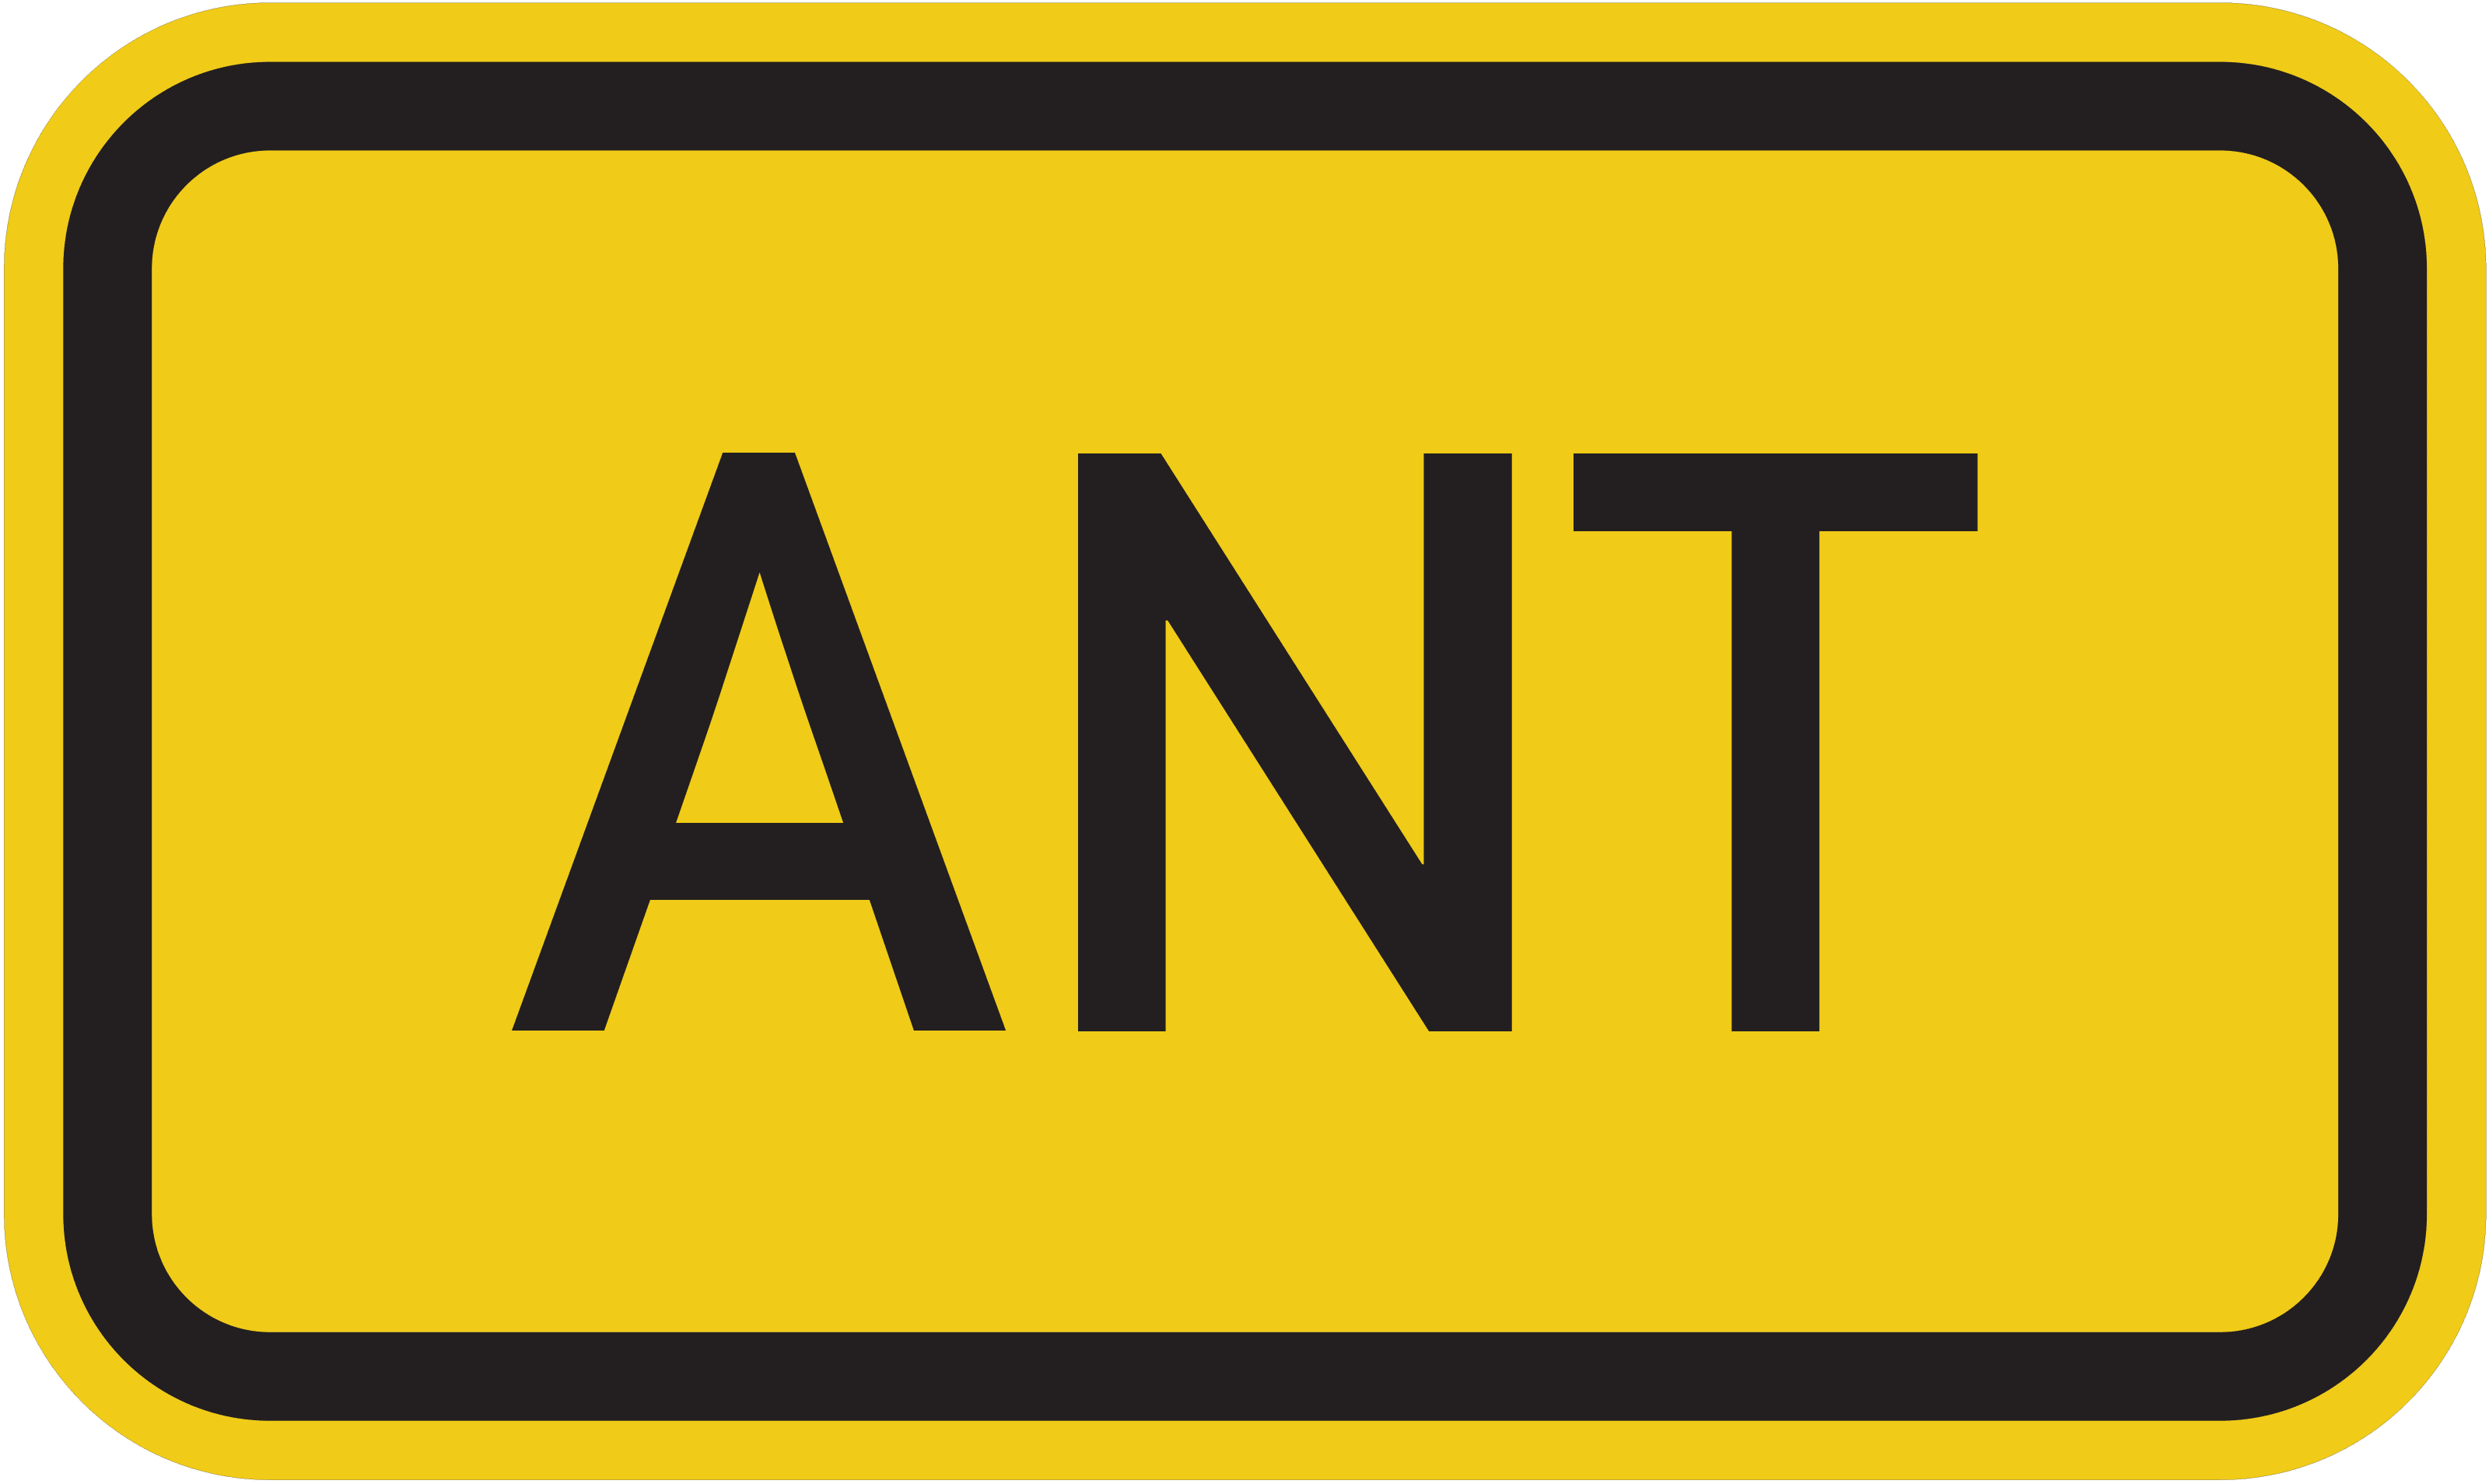 Straßenschild Bundesstraße BANT